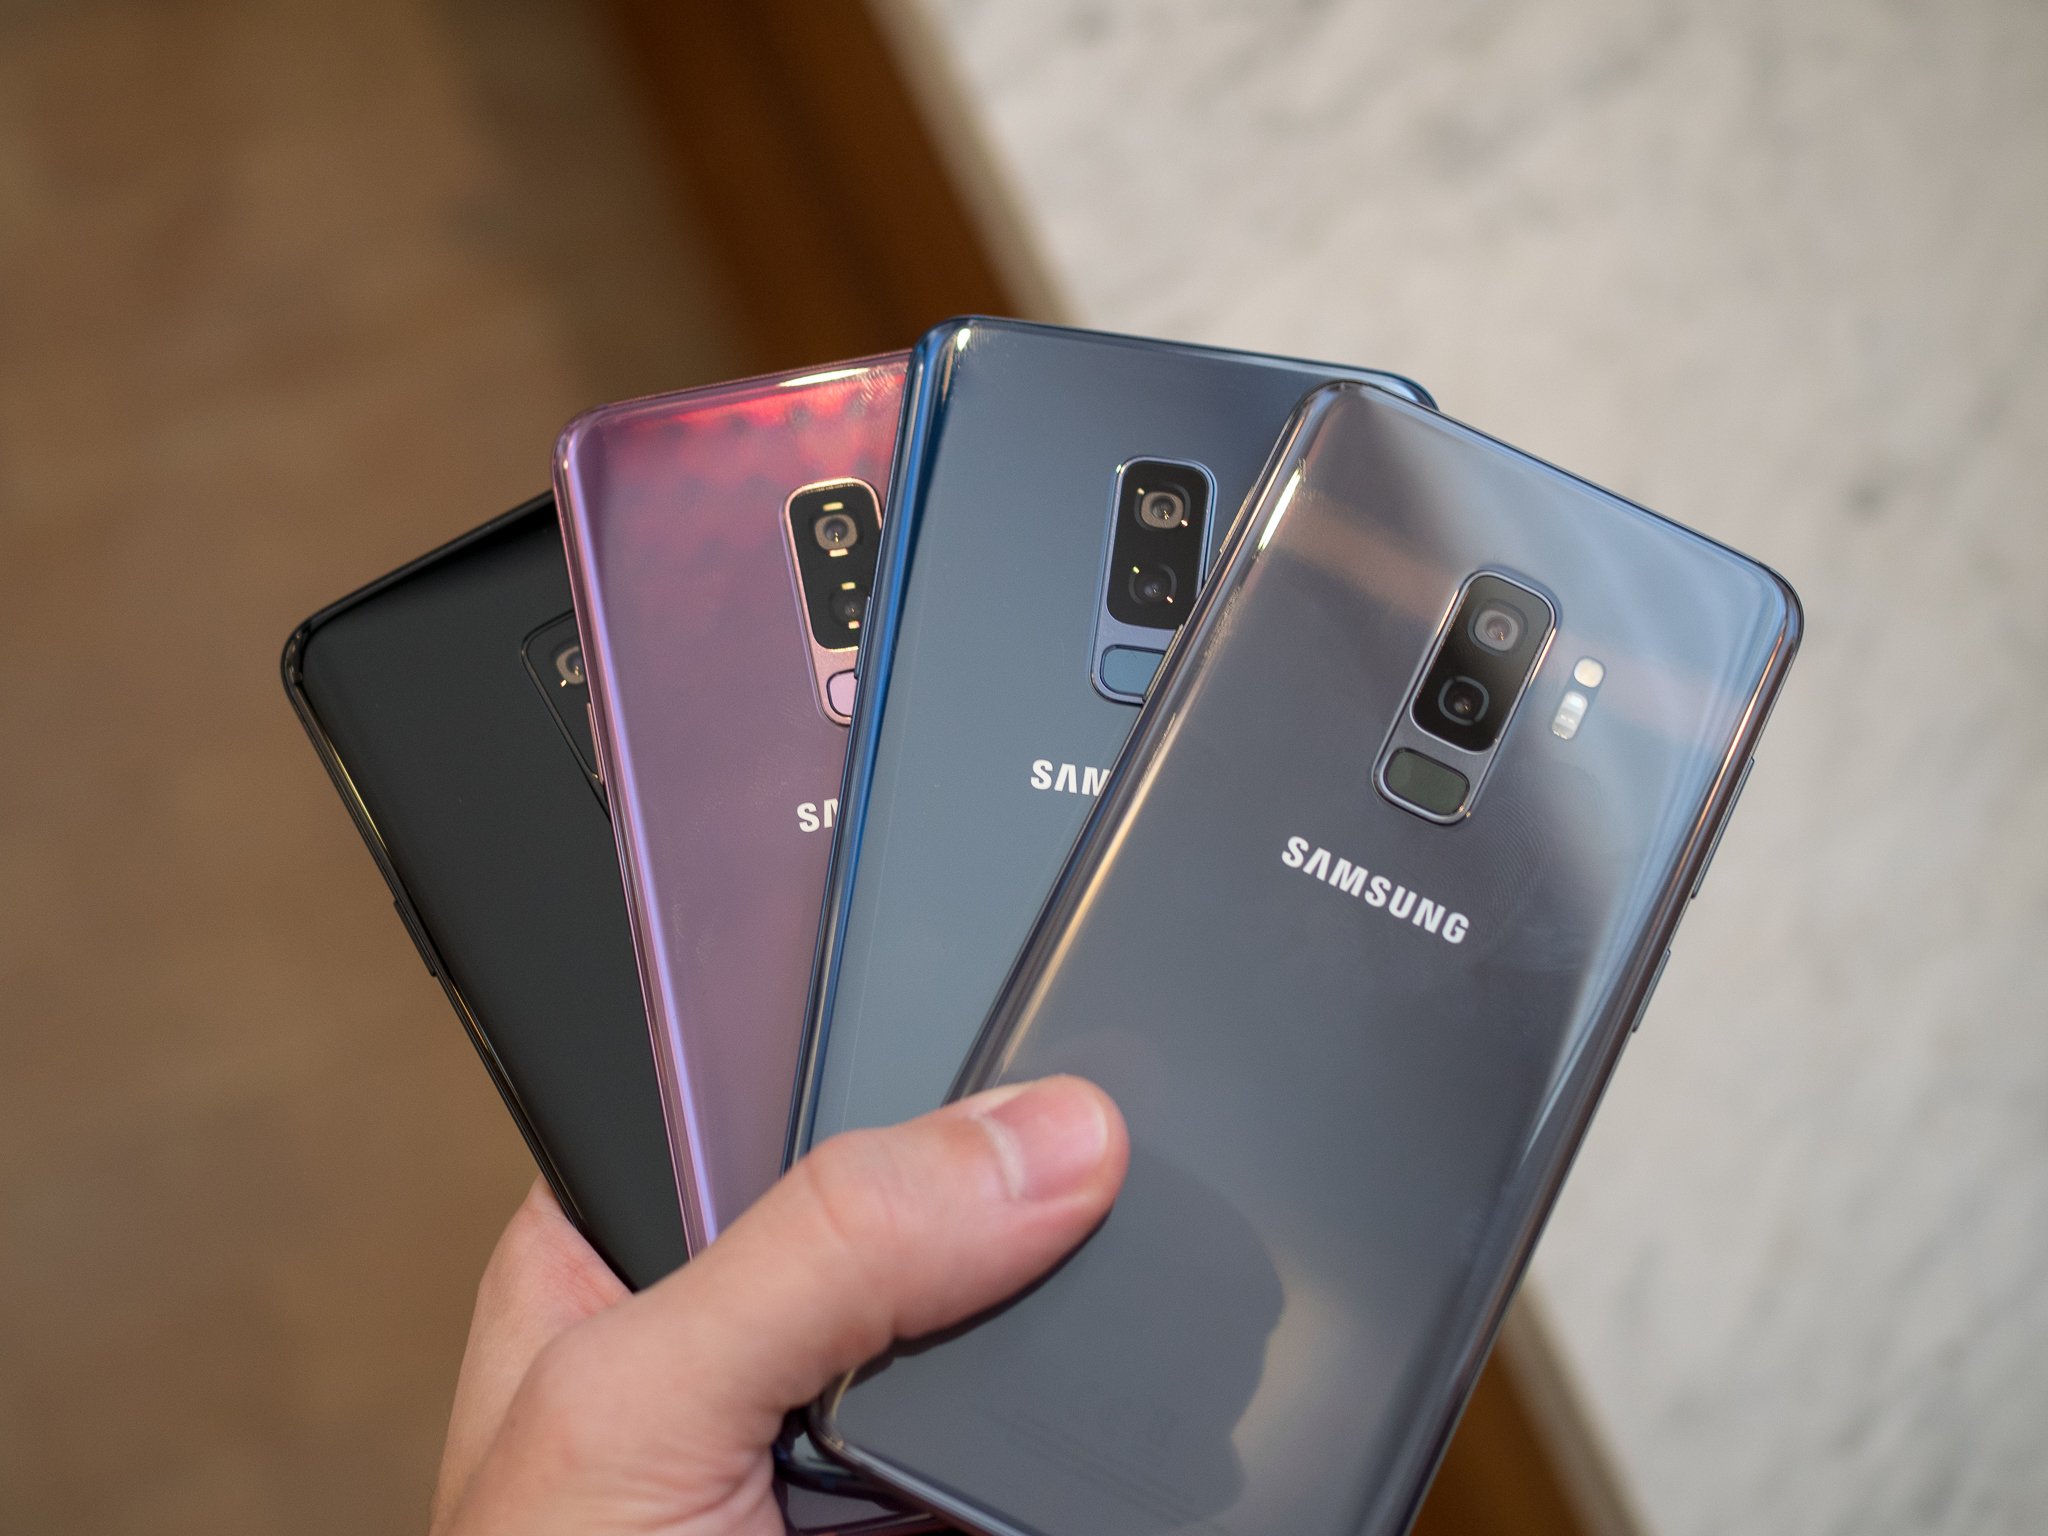 Samsung Galaxy s9+ Plus